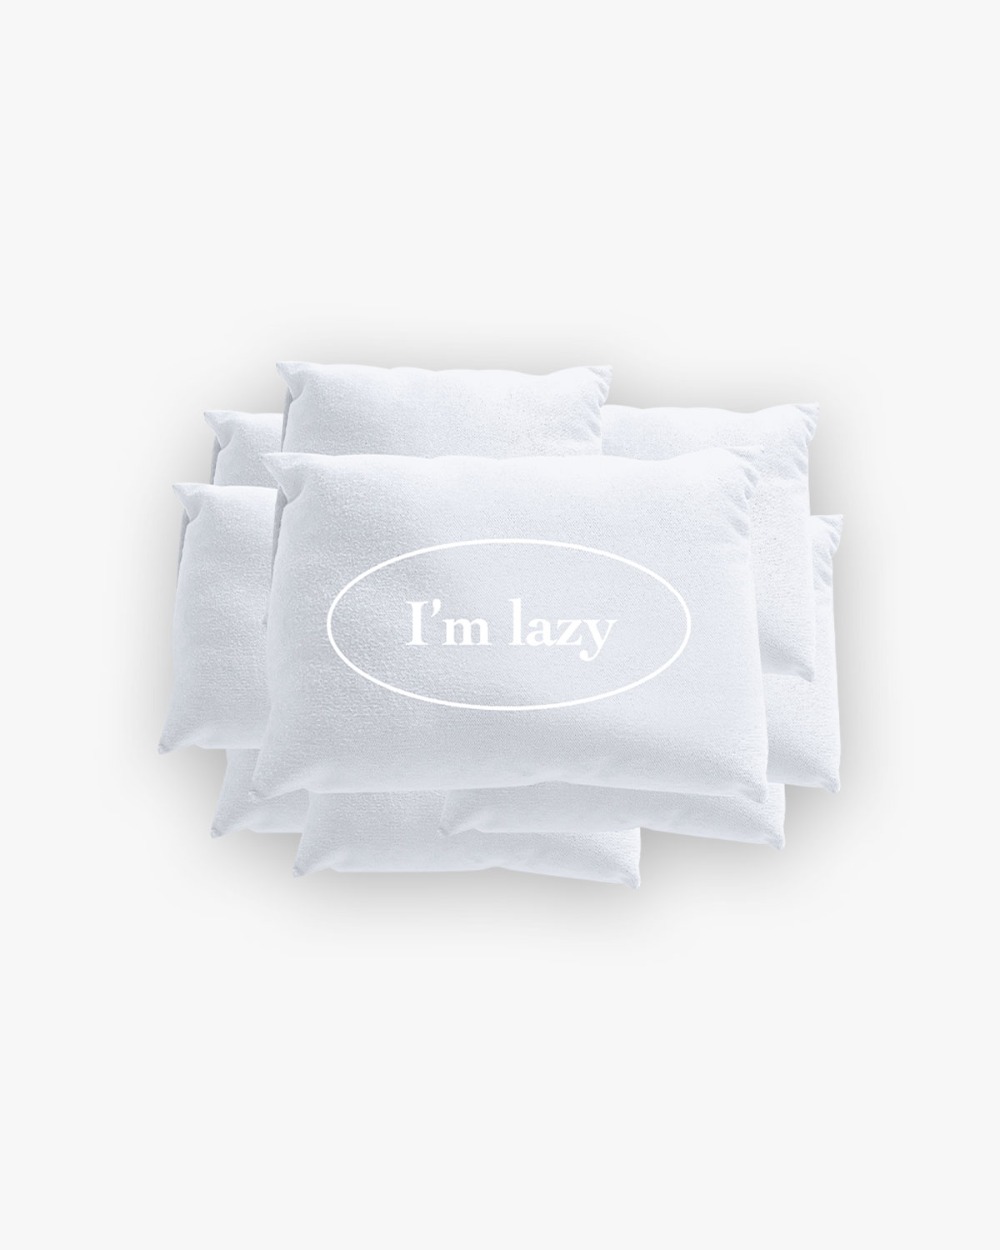 Lazy Pillow Griptok